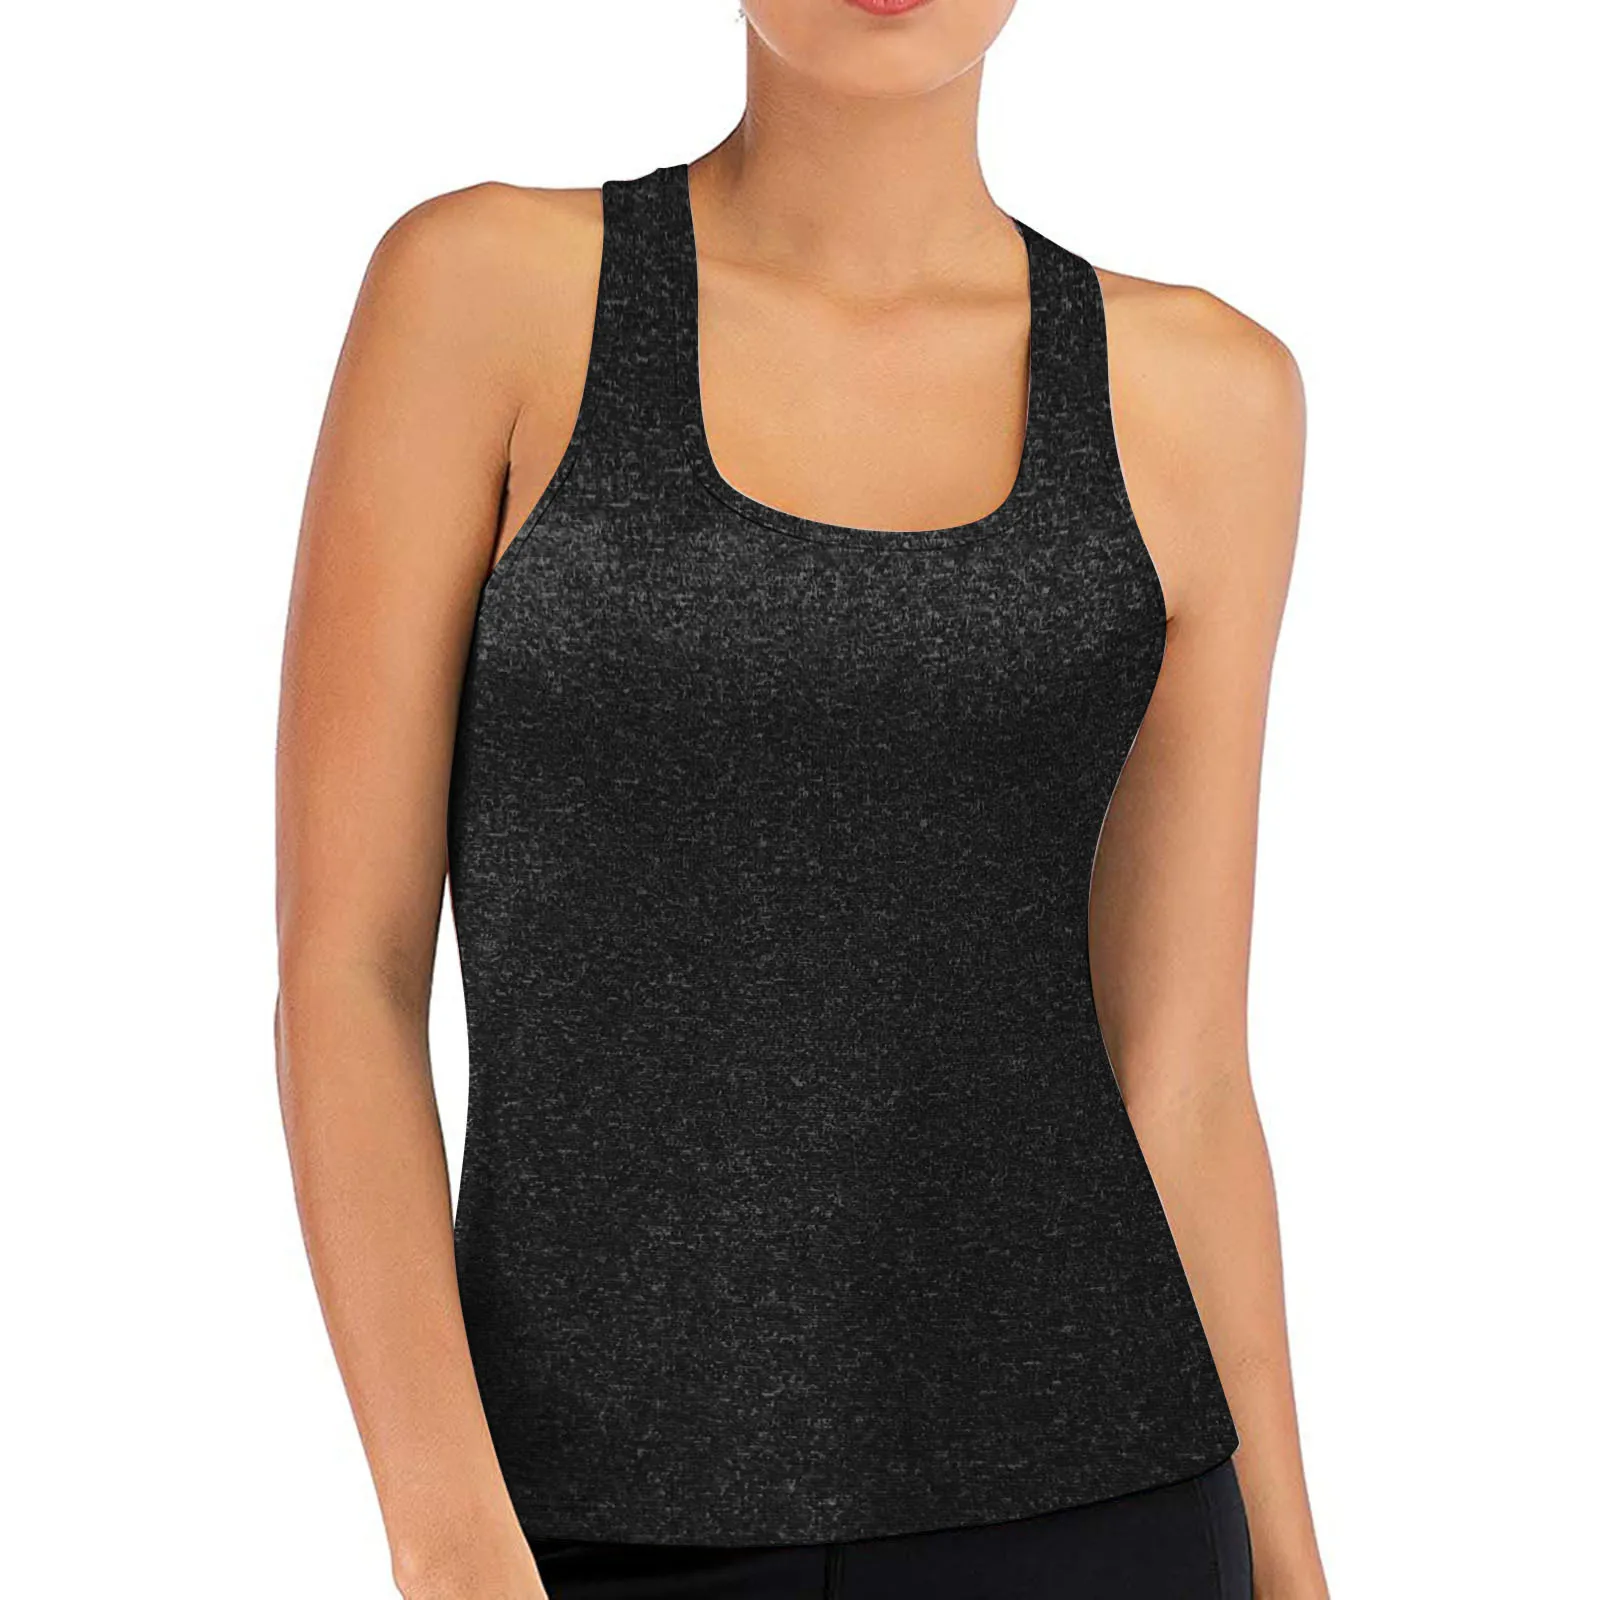 

New Sleeveless Racerback Yoga Vest Sport Singlet Women Athletic Fitness Sport Tank Tops Gym Running Training Yoga Shirts